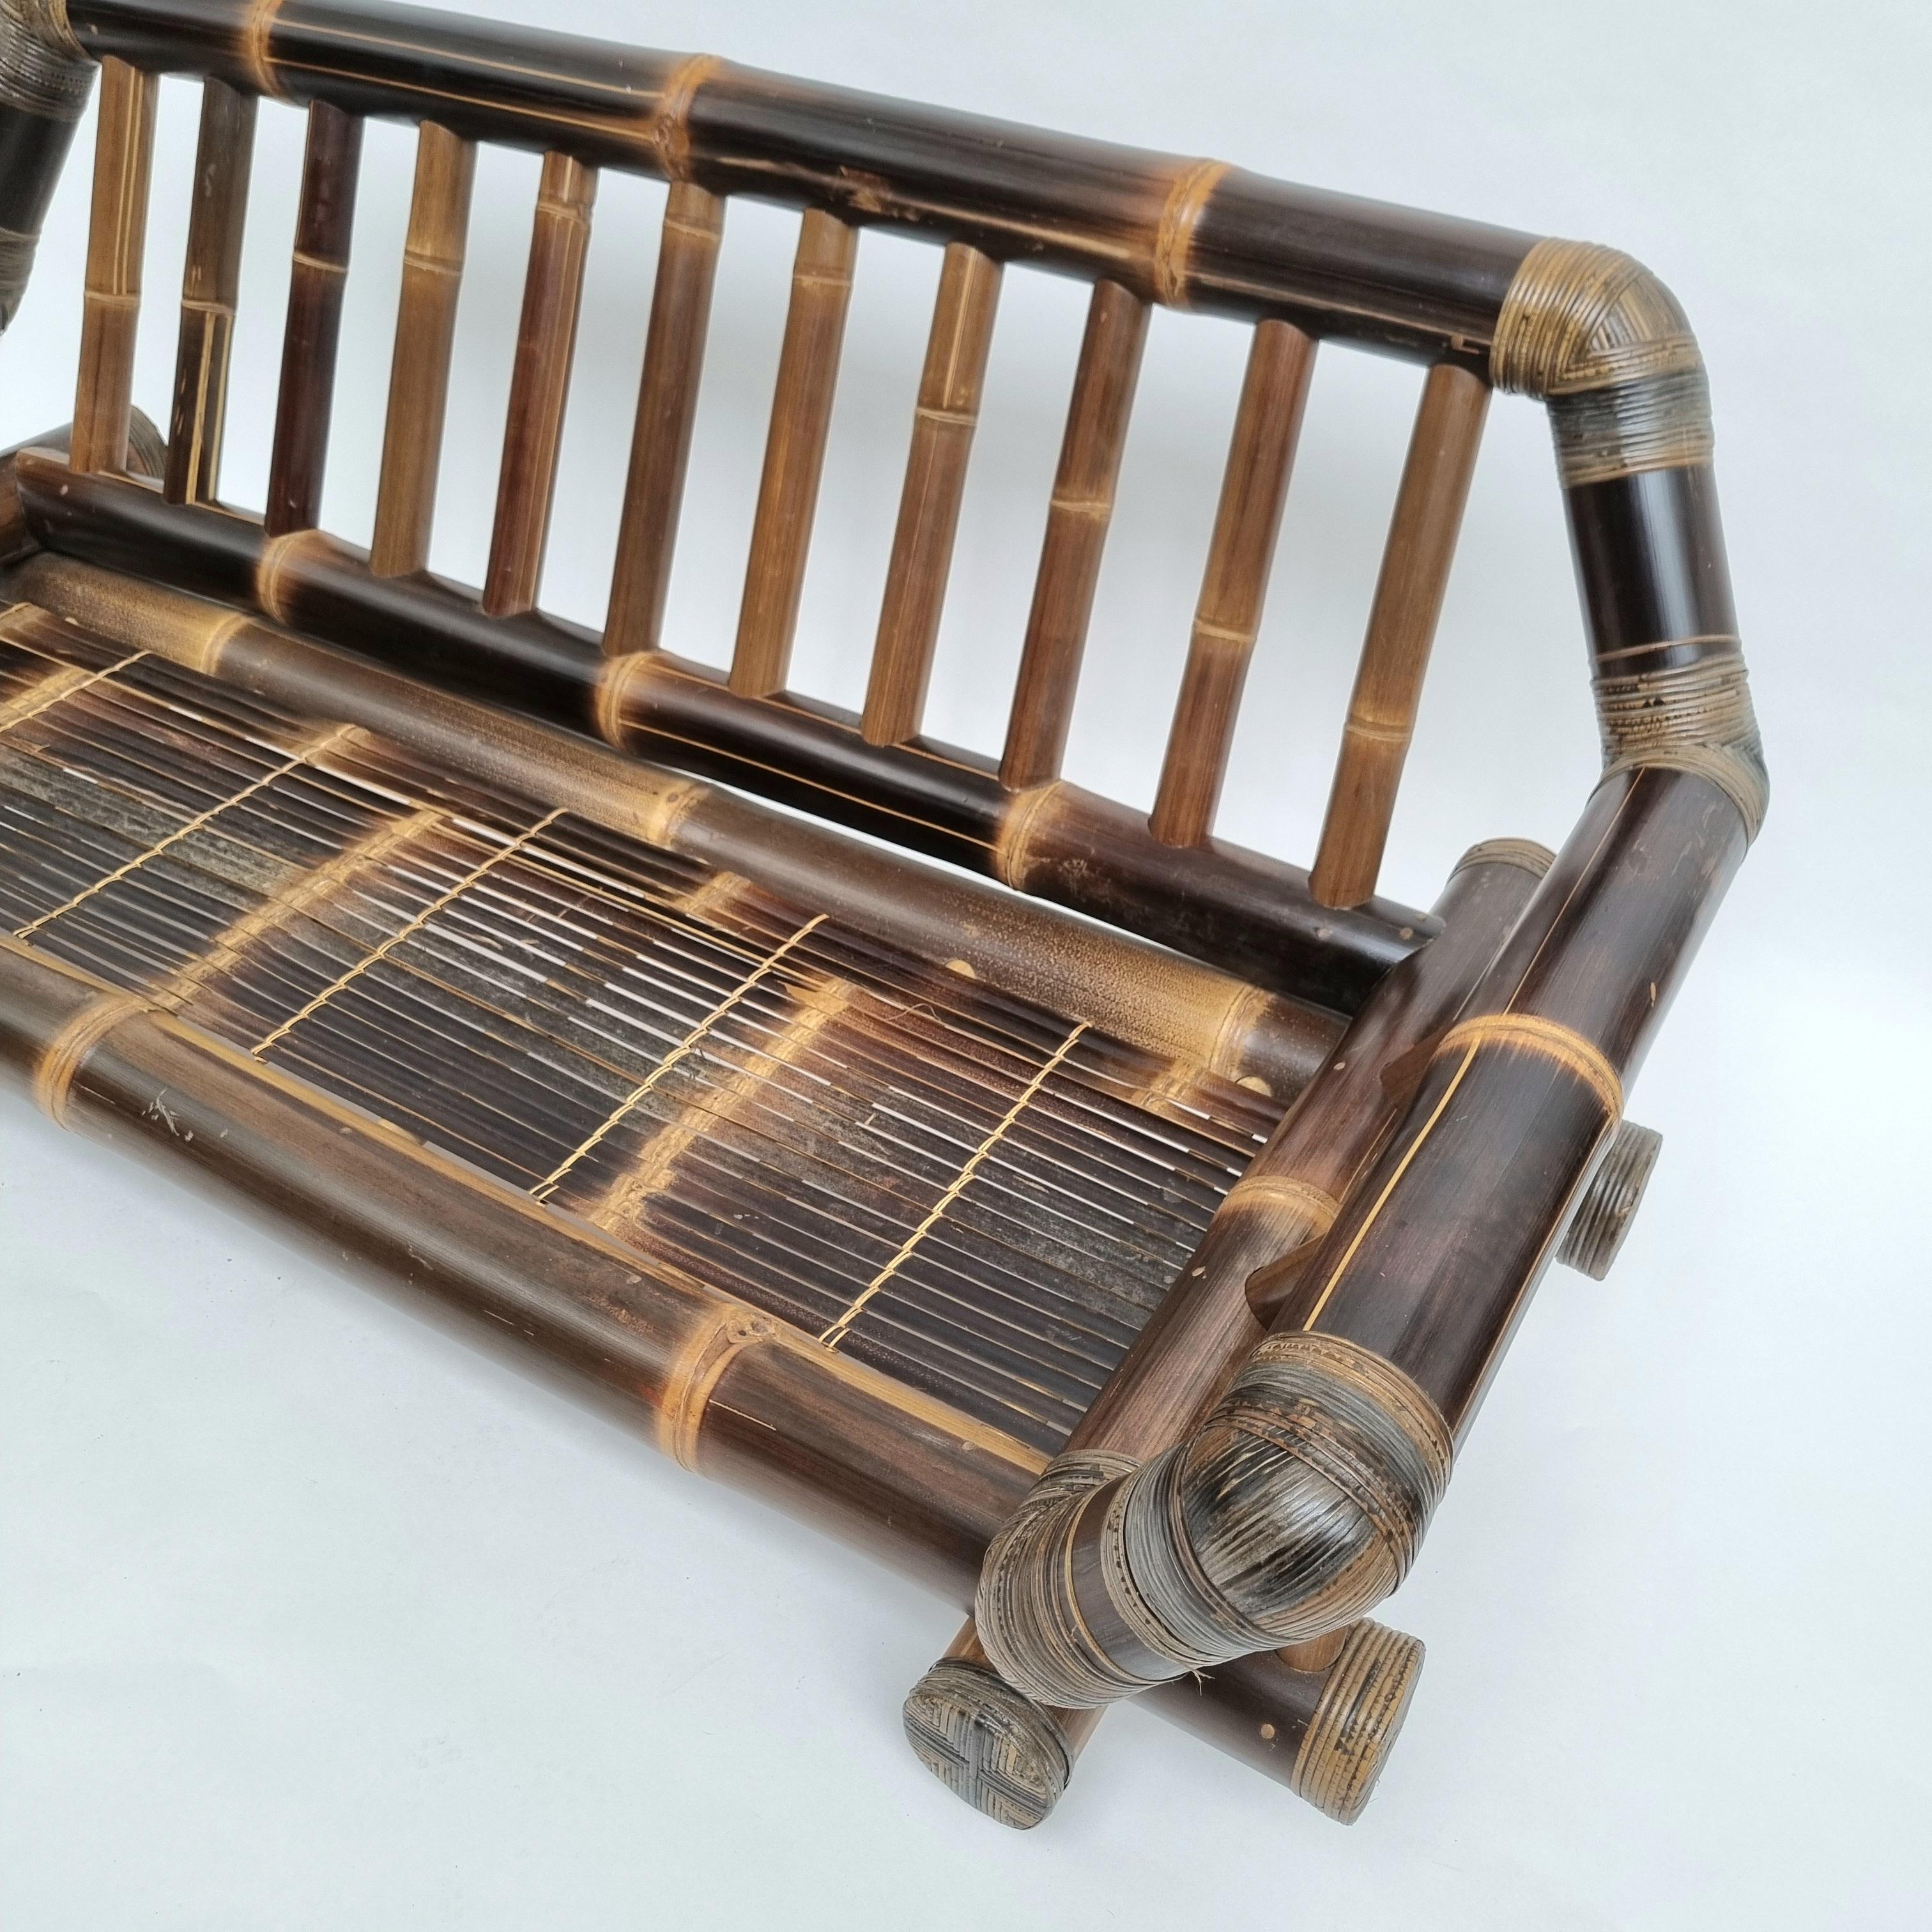 bamboo sofa bed